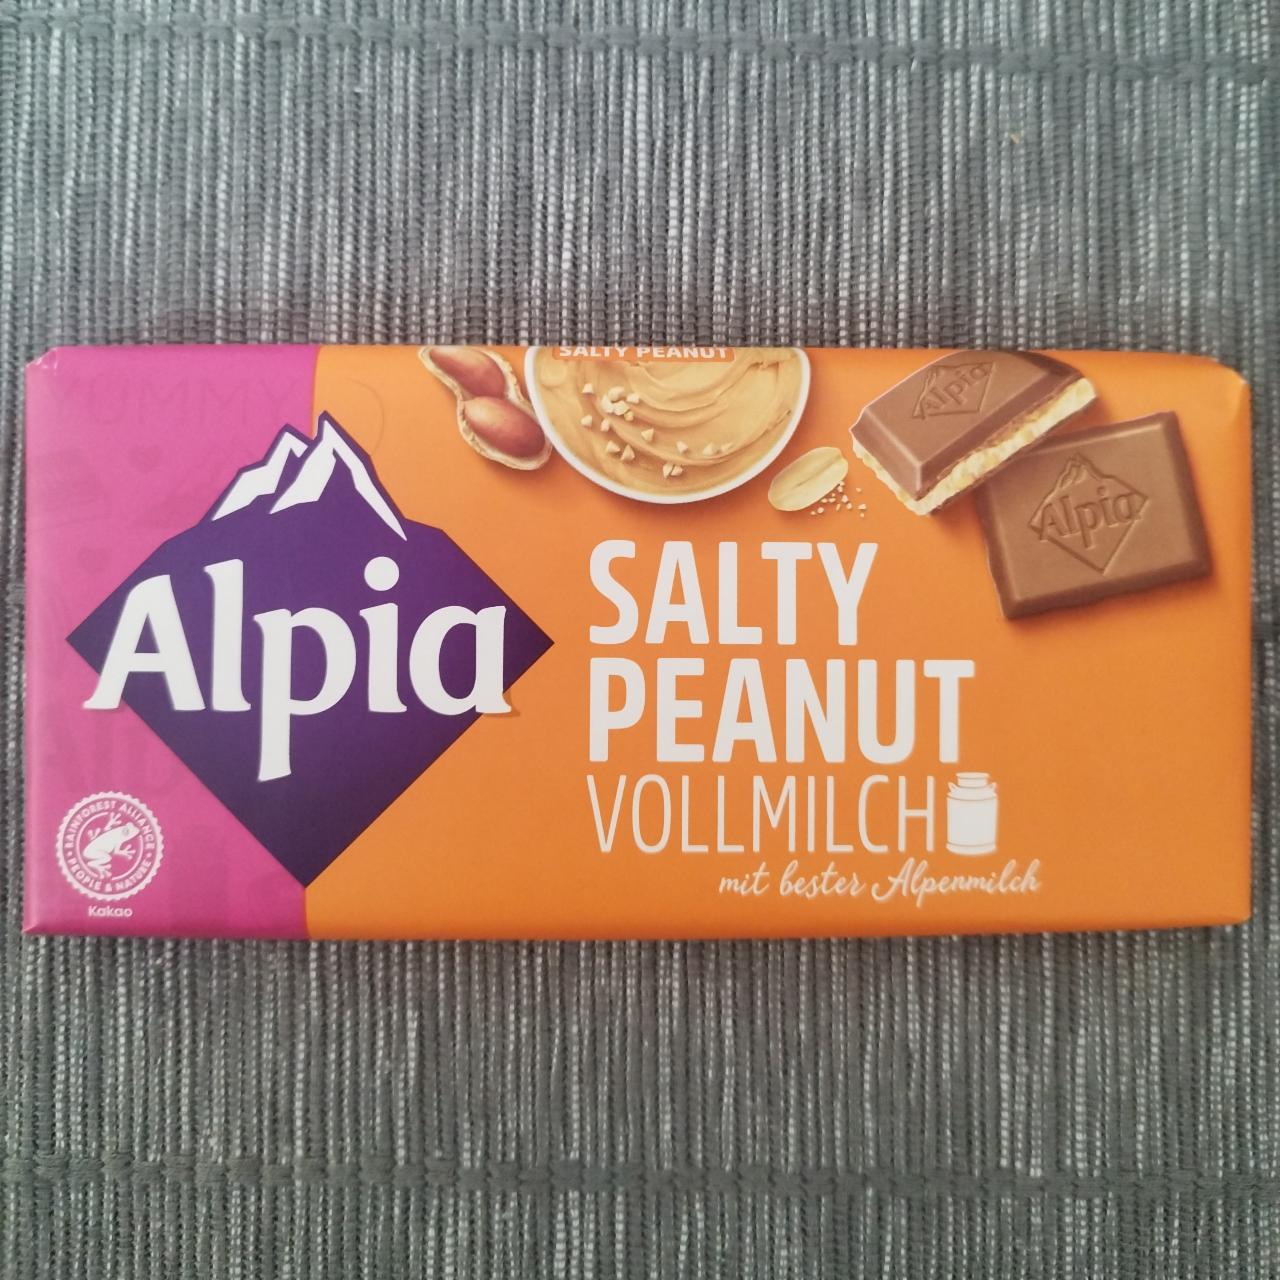 Fotografie - Salty Peanuts Vollmilch Alpia